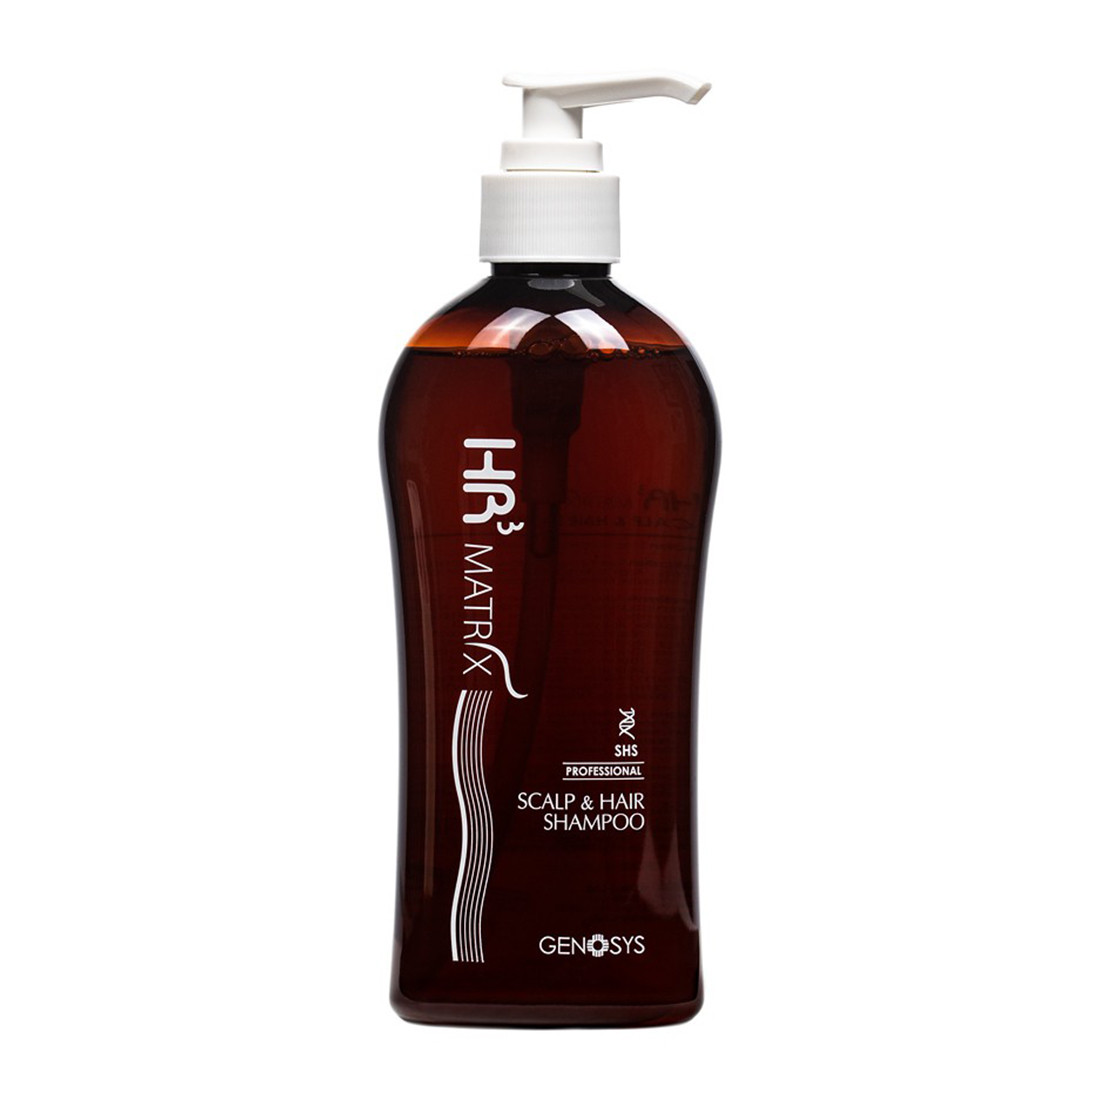 Відгуки про Genosys HR3 Matrix Scalp and Hair Shampoo (CHS) Шампунь против выпадения волос